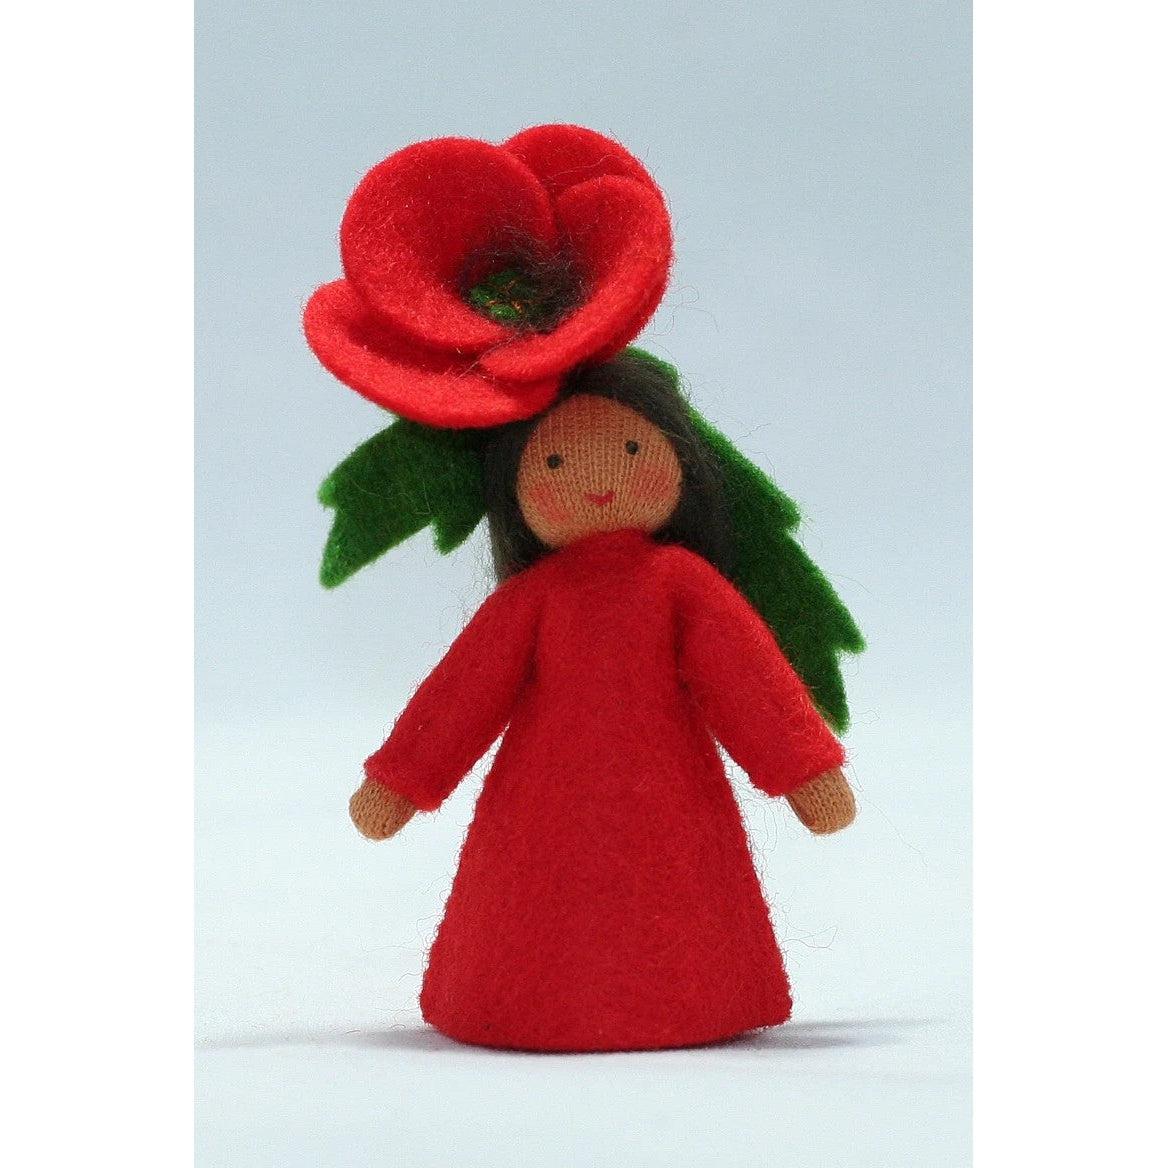 Poppy Doll with Flower on Head - Medium Skin